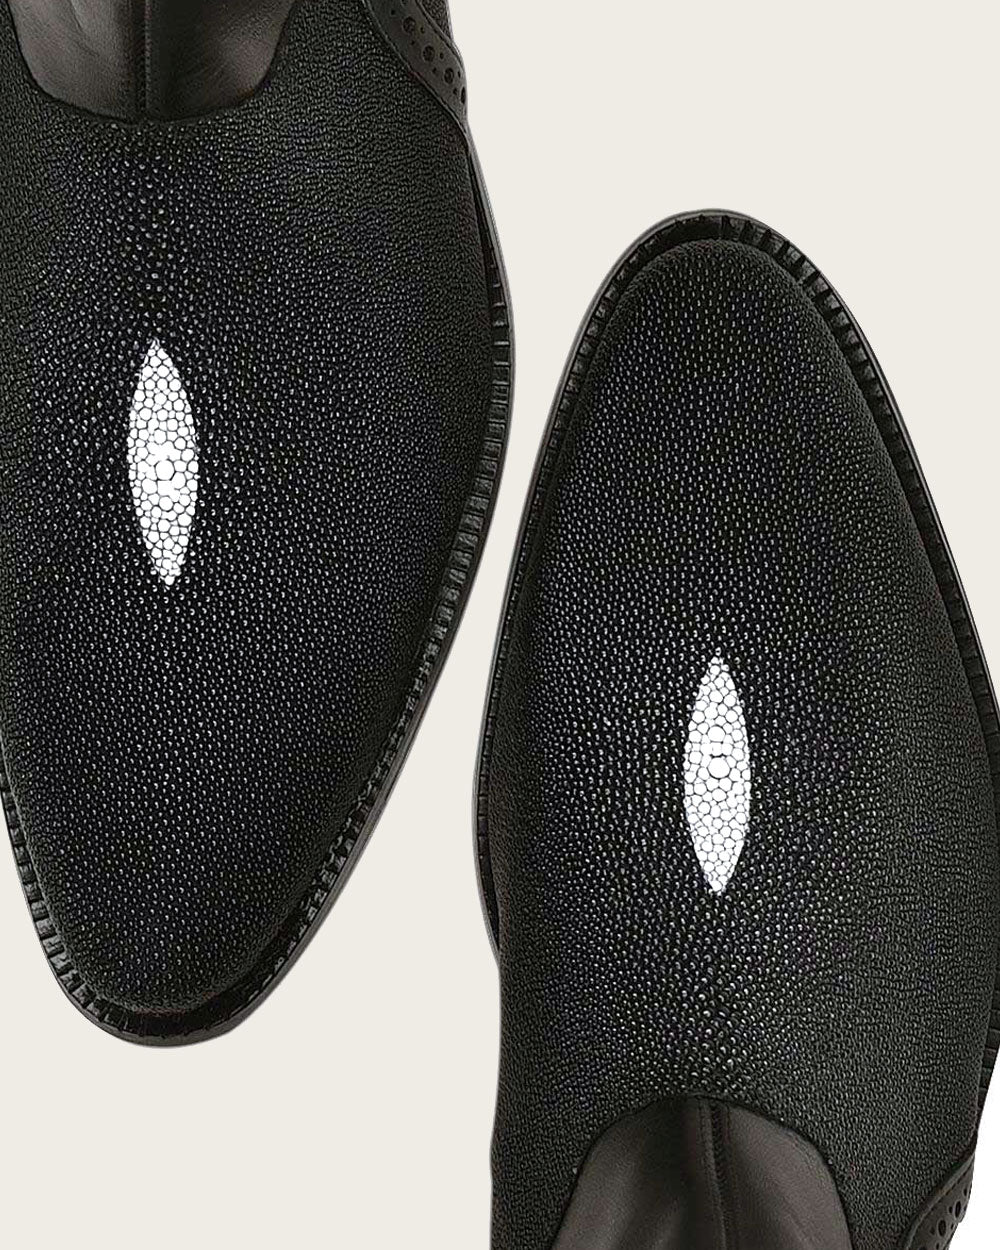 Black stingray leather: A statement piece for your wardrobe by Cuadra. 